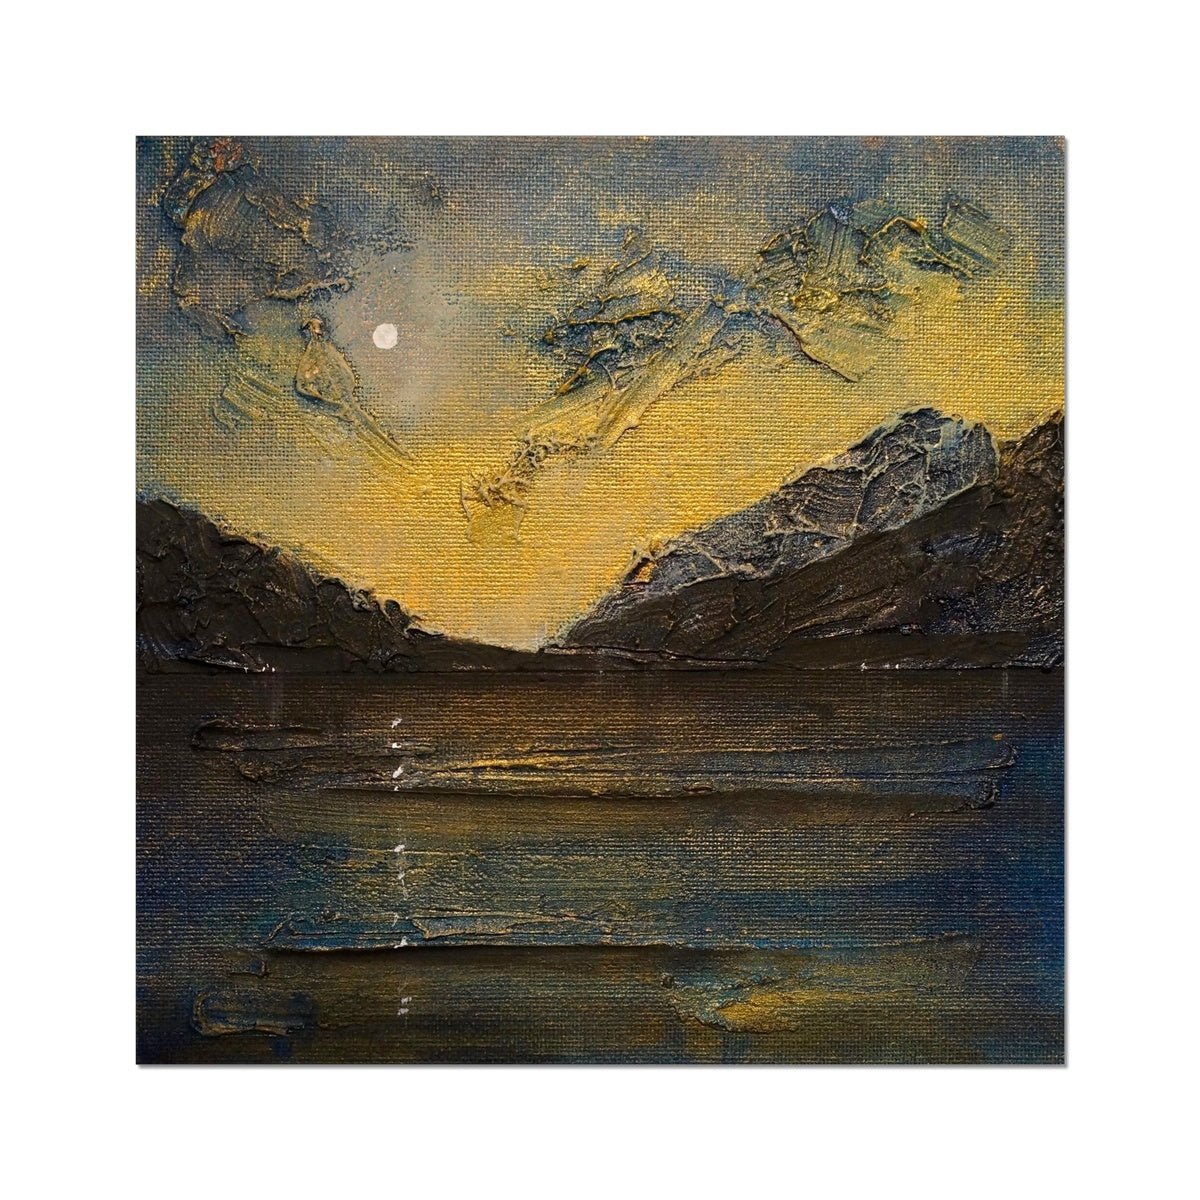 Loch Lomond Moonlight Painting | Fine Art Prints From Scotland-Unframed Prints-Scottish Lochs & Mountains Art Gallery-24"x24"-Paintings, Prints, Homeware, Art Gifts From Scotland By Scottish Artist Kevin Hunter